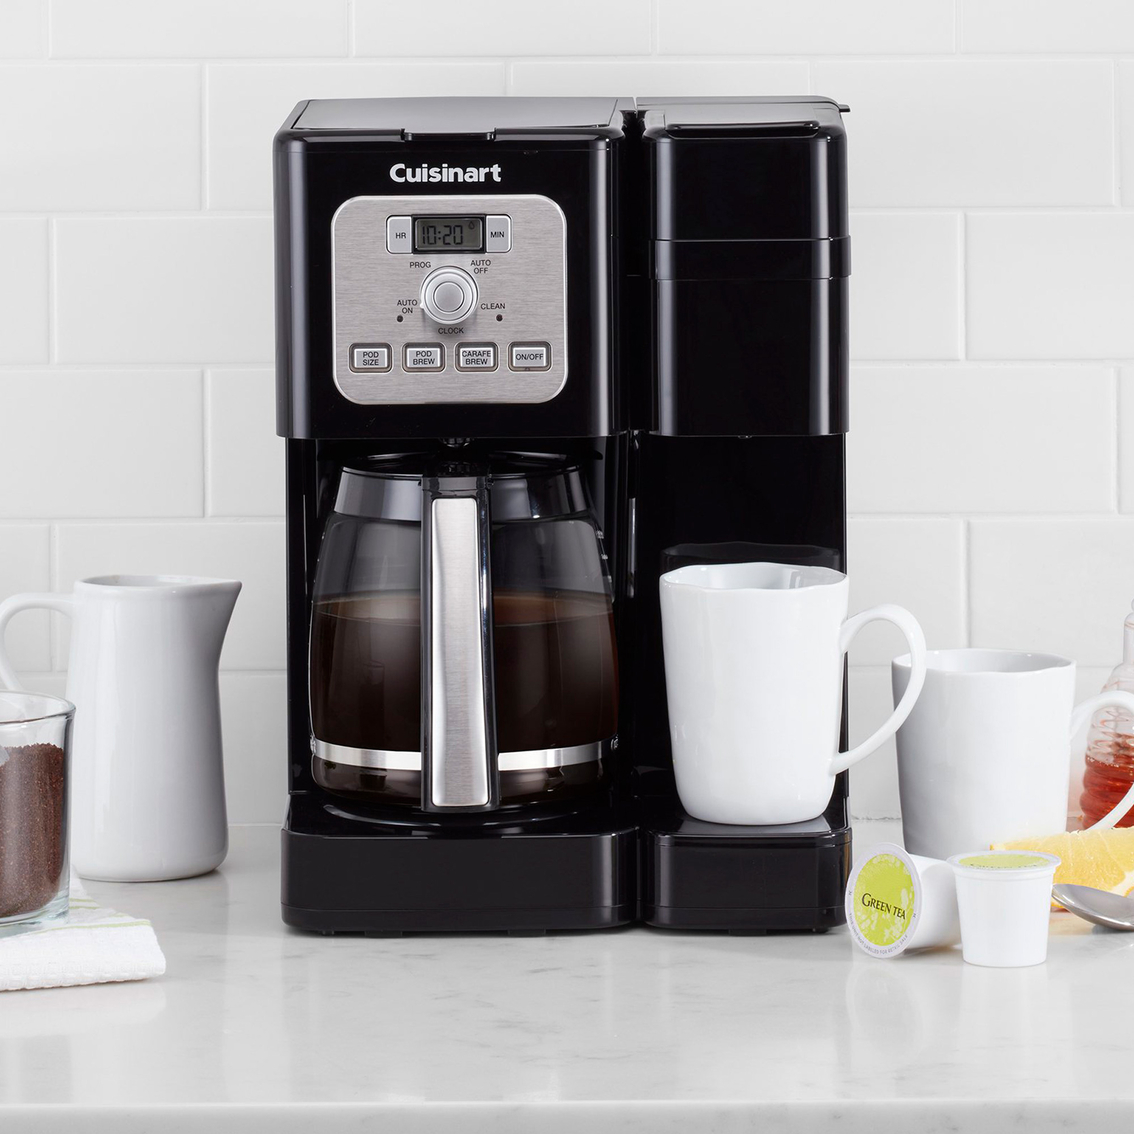 Cuisinart Coffee Center Brew Basics - Image 3 of 3